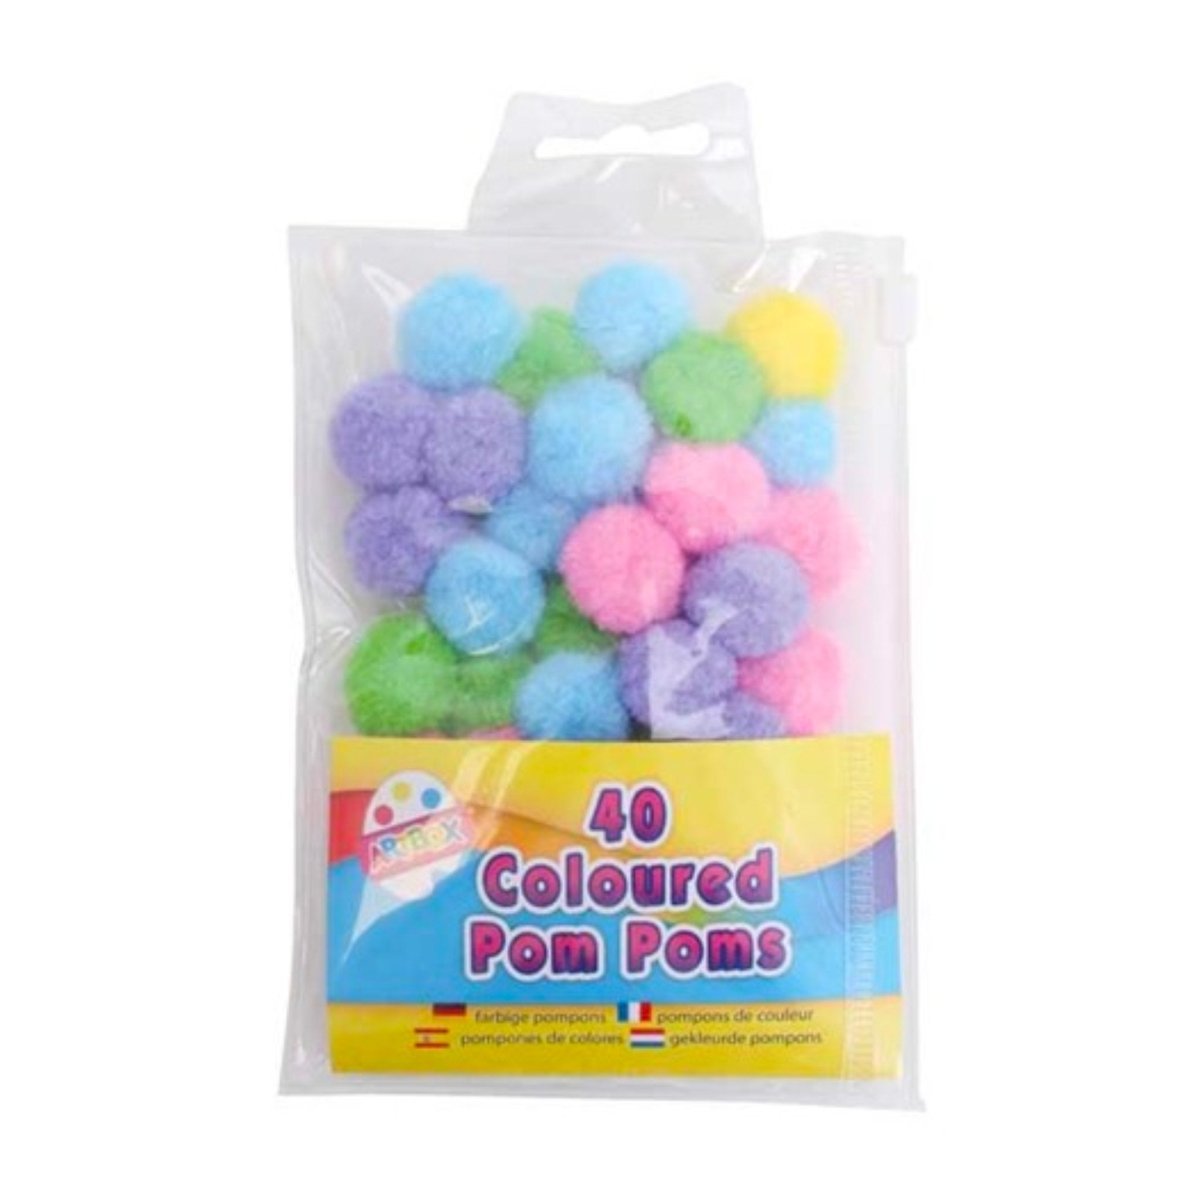 Coloured Pom Poms (40 Pieces) - Kids Party Craft